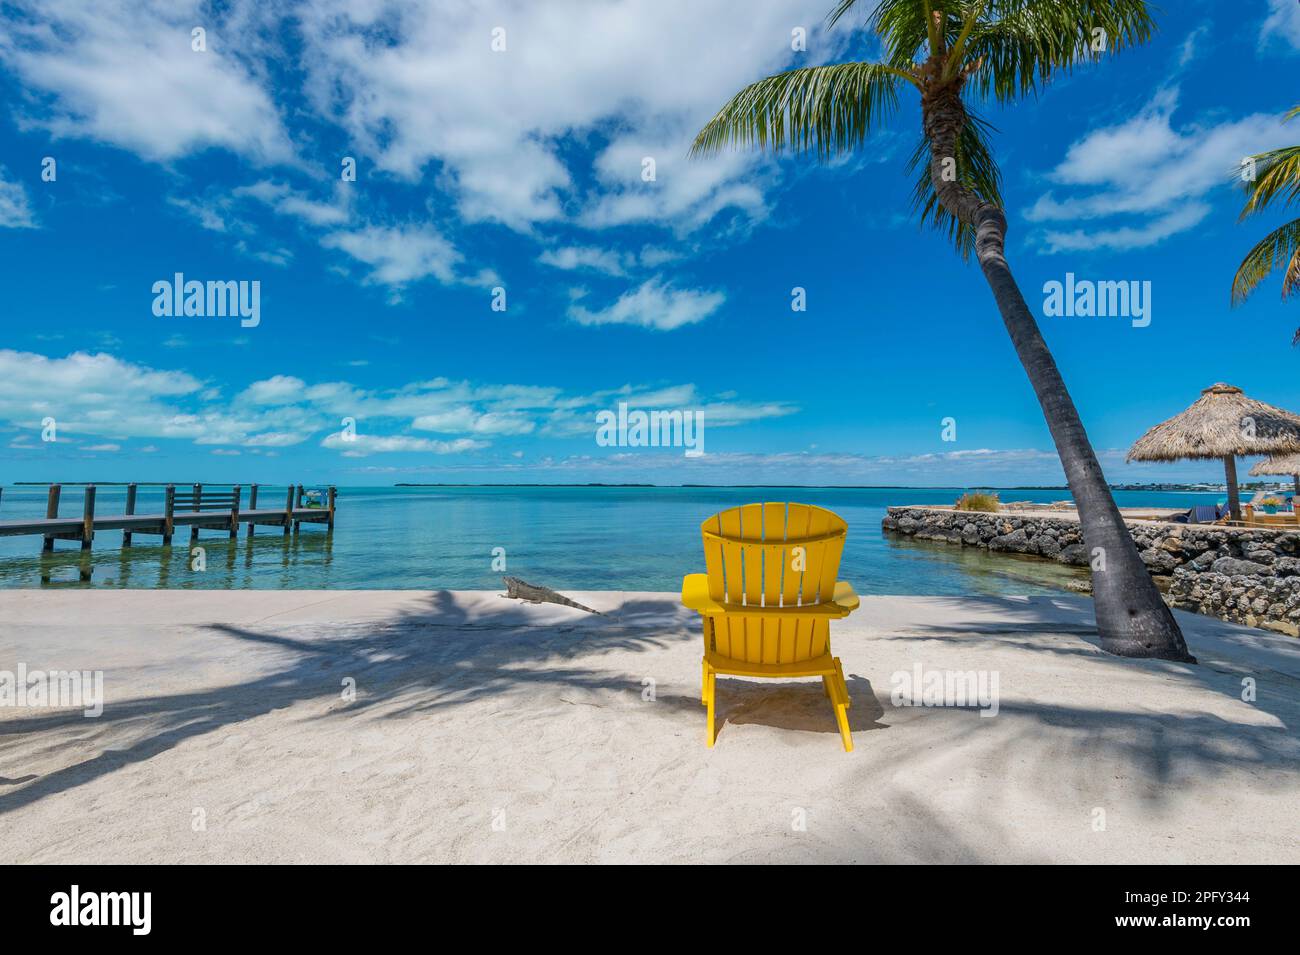 Yellow chair on beach with one lone palm tree and an iguana, Key Largo, Florida, USA Stock Photo